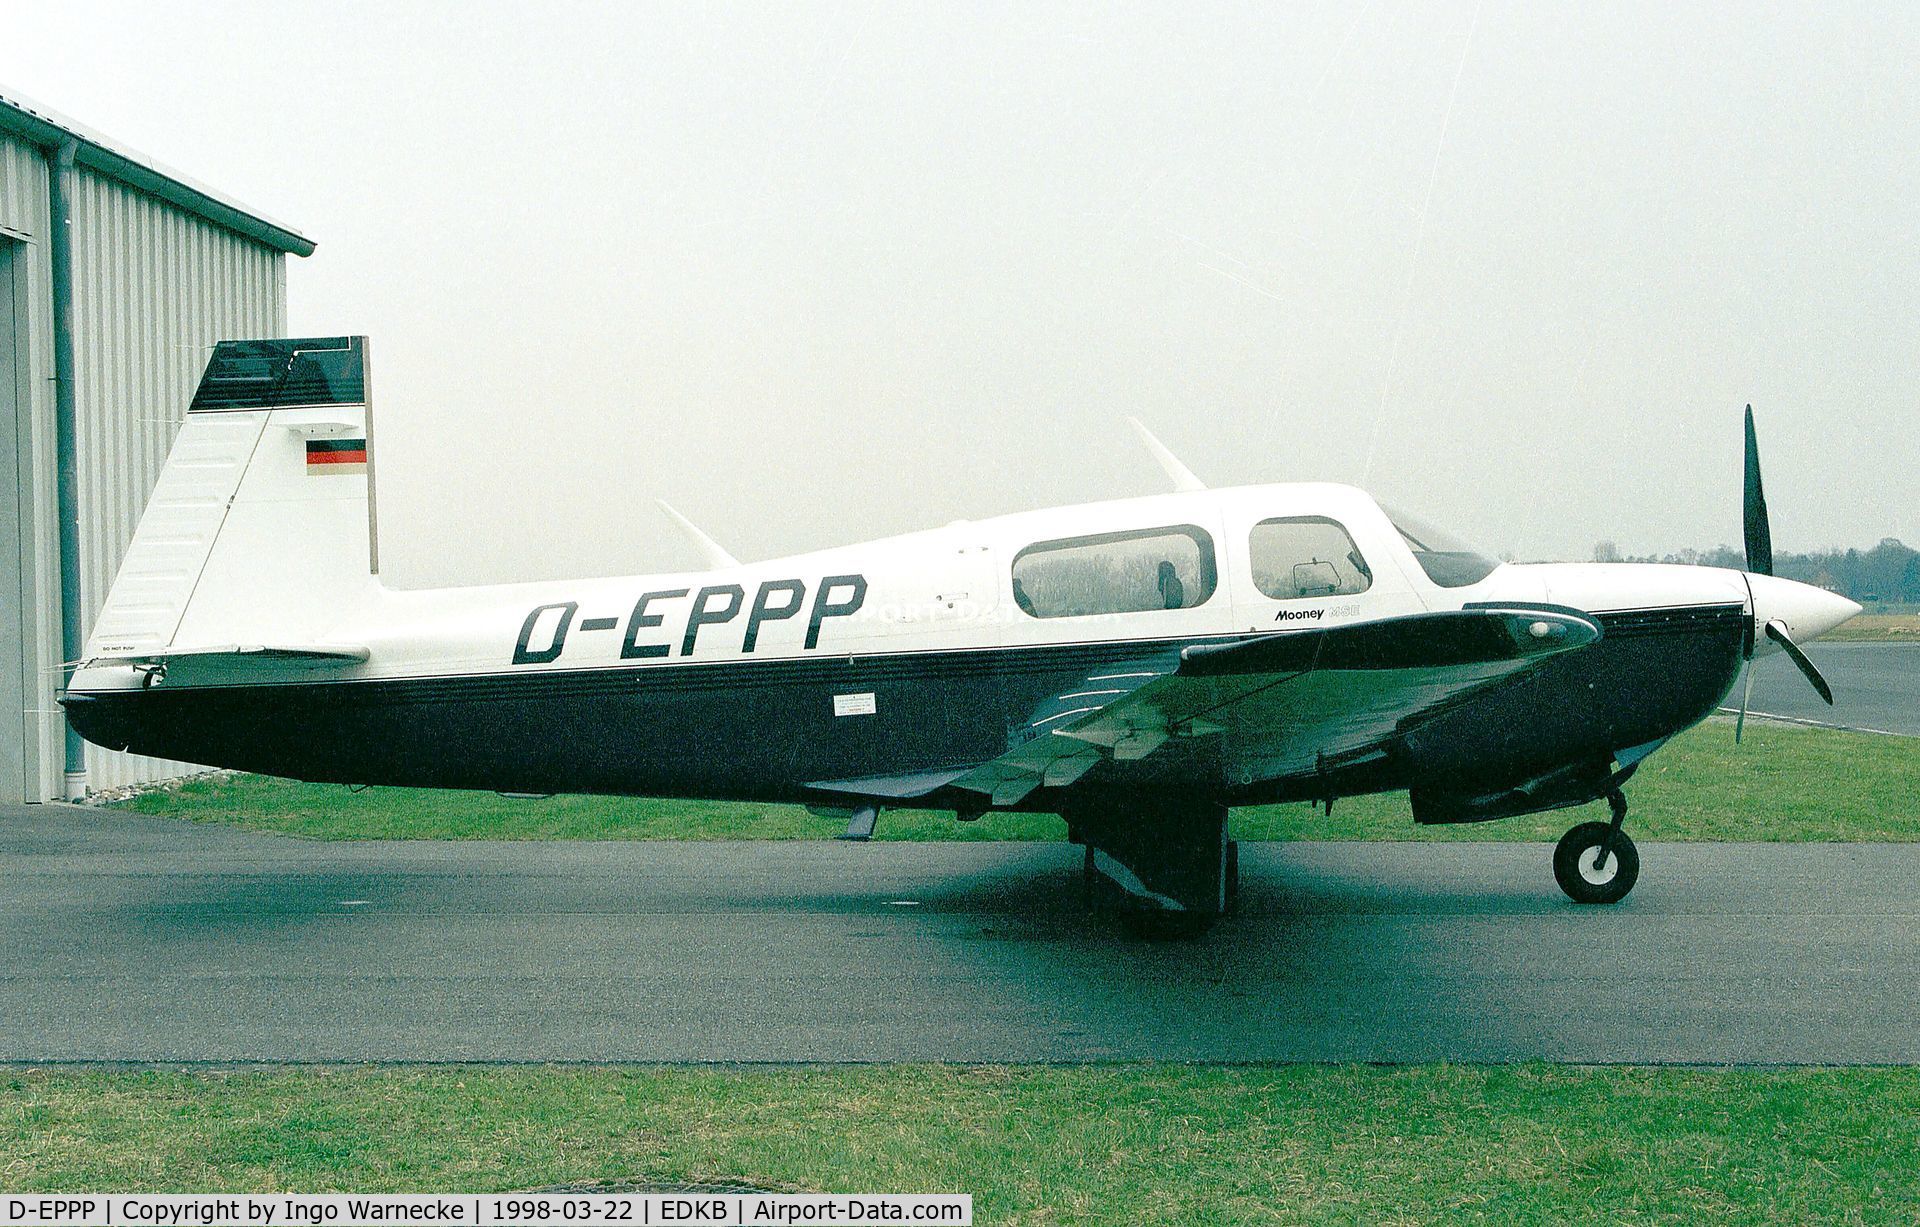 D-EPPP, 1993 Mooney M20J MSE 201 C/N 24-3292, Mooney M20J 205 MSE at Bonn-Hangelar airfield